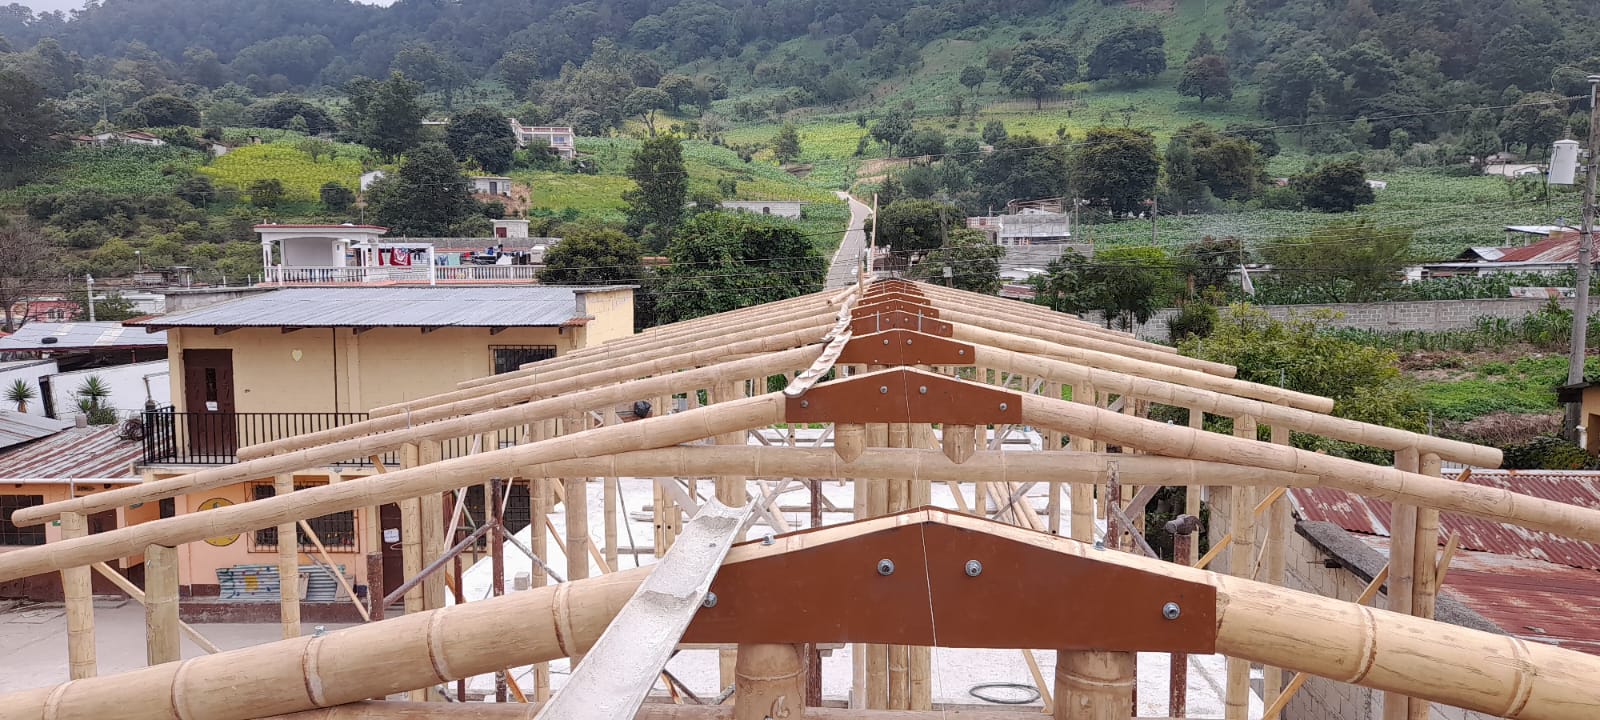 Dachkonstruktion aus Bambus